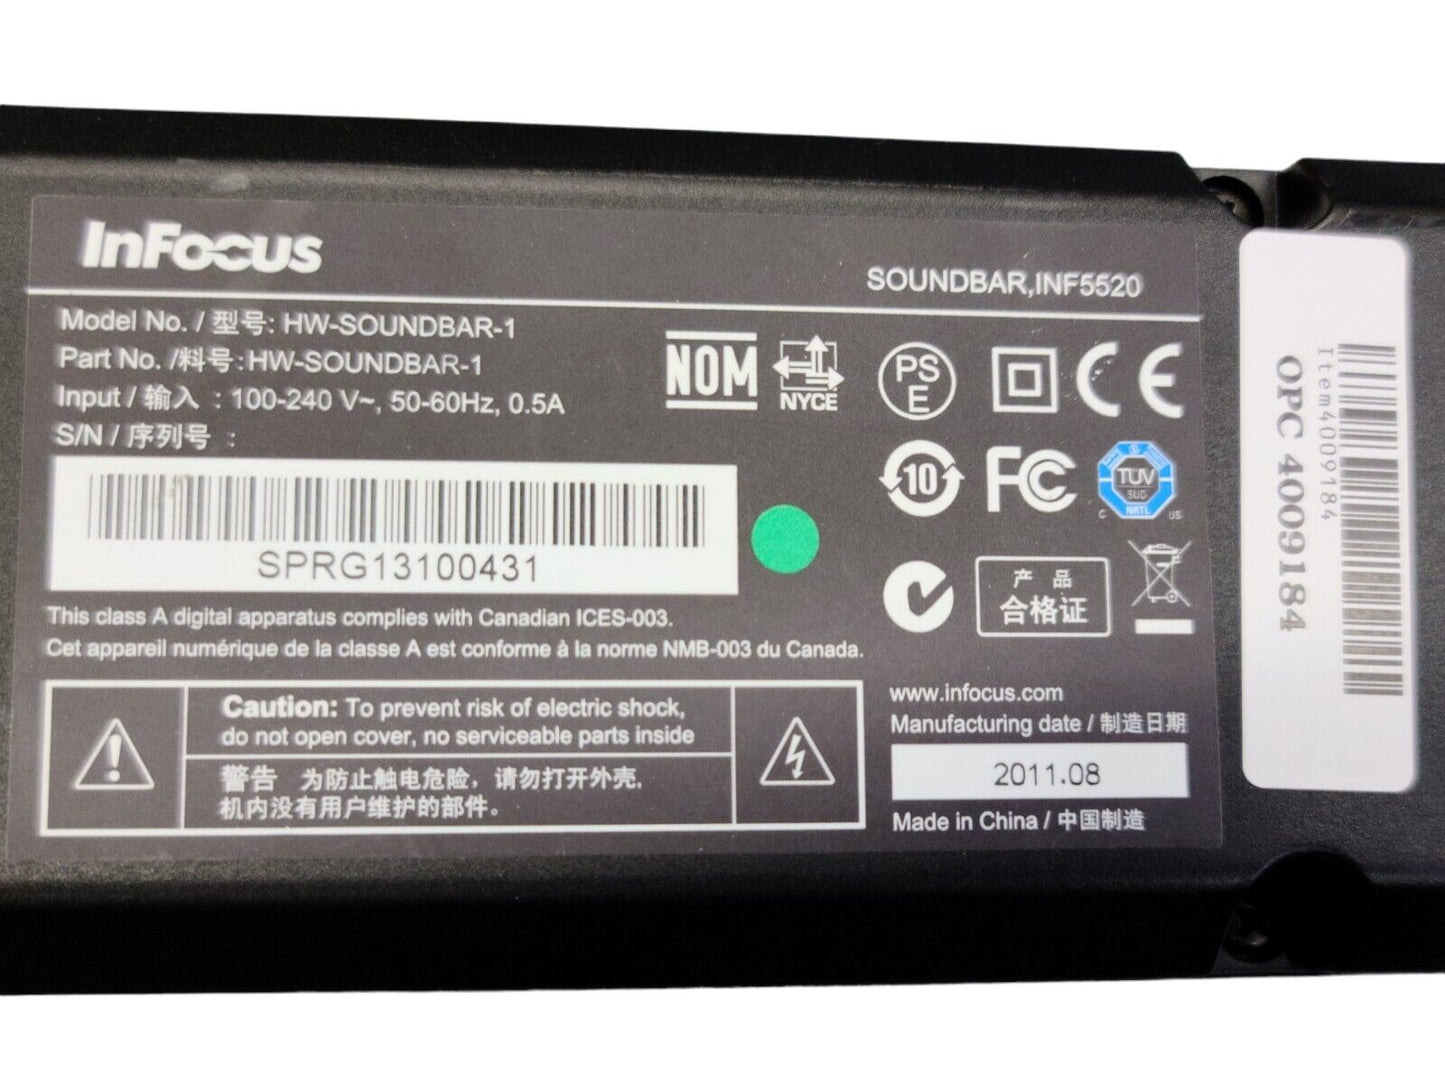 Lot of 2 InFocus Sound Bar for Mondo pad Touchscreen Unit- HW-SOUNDBAR-1